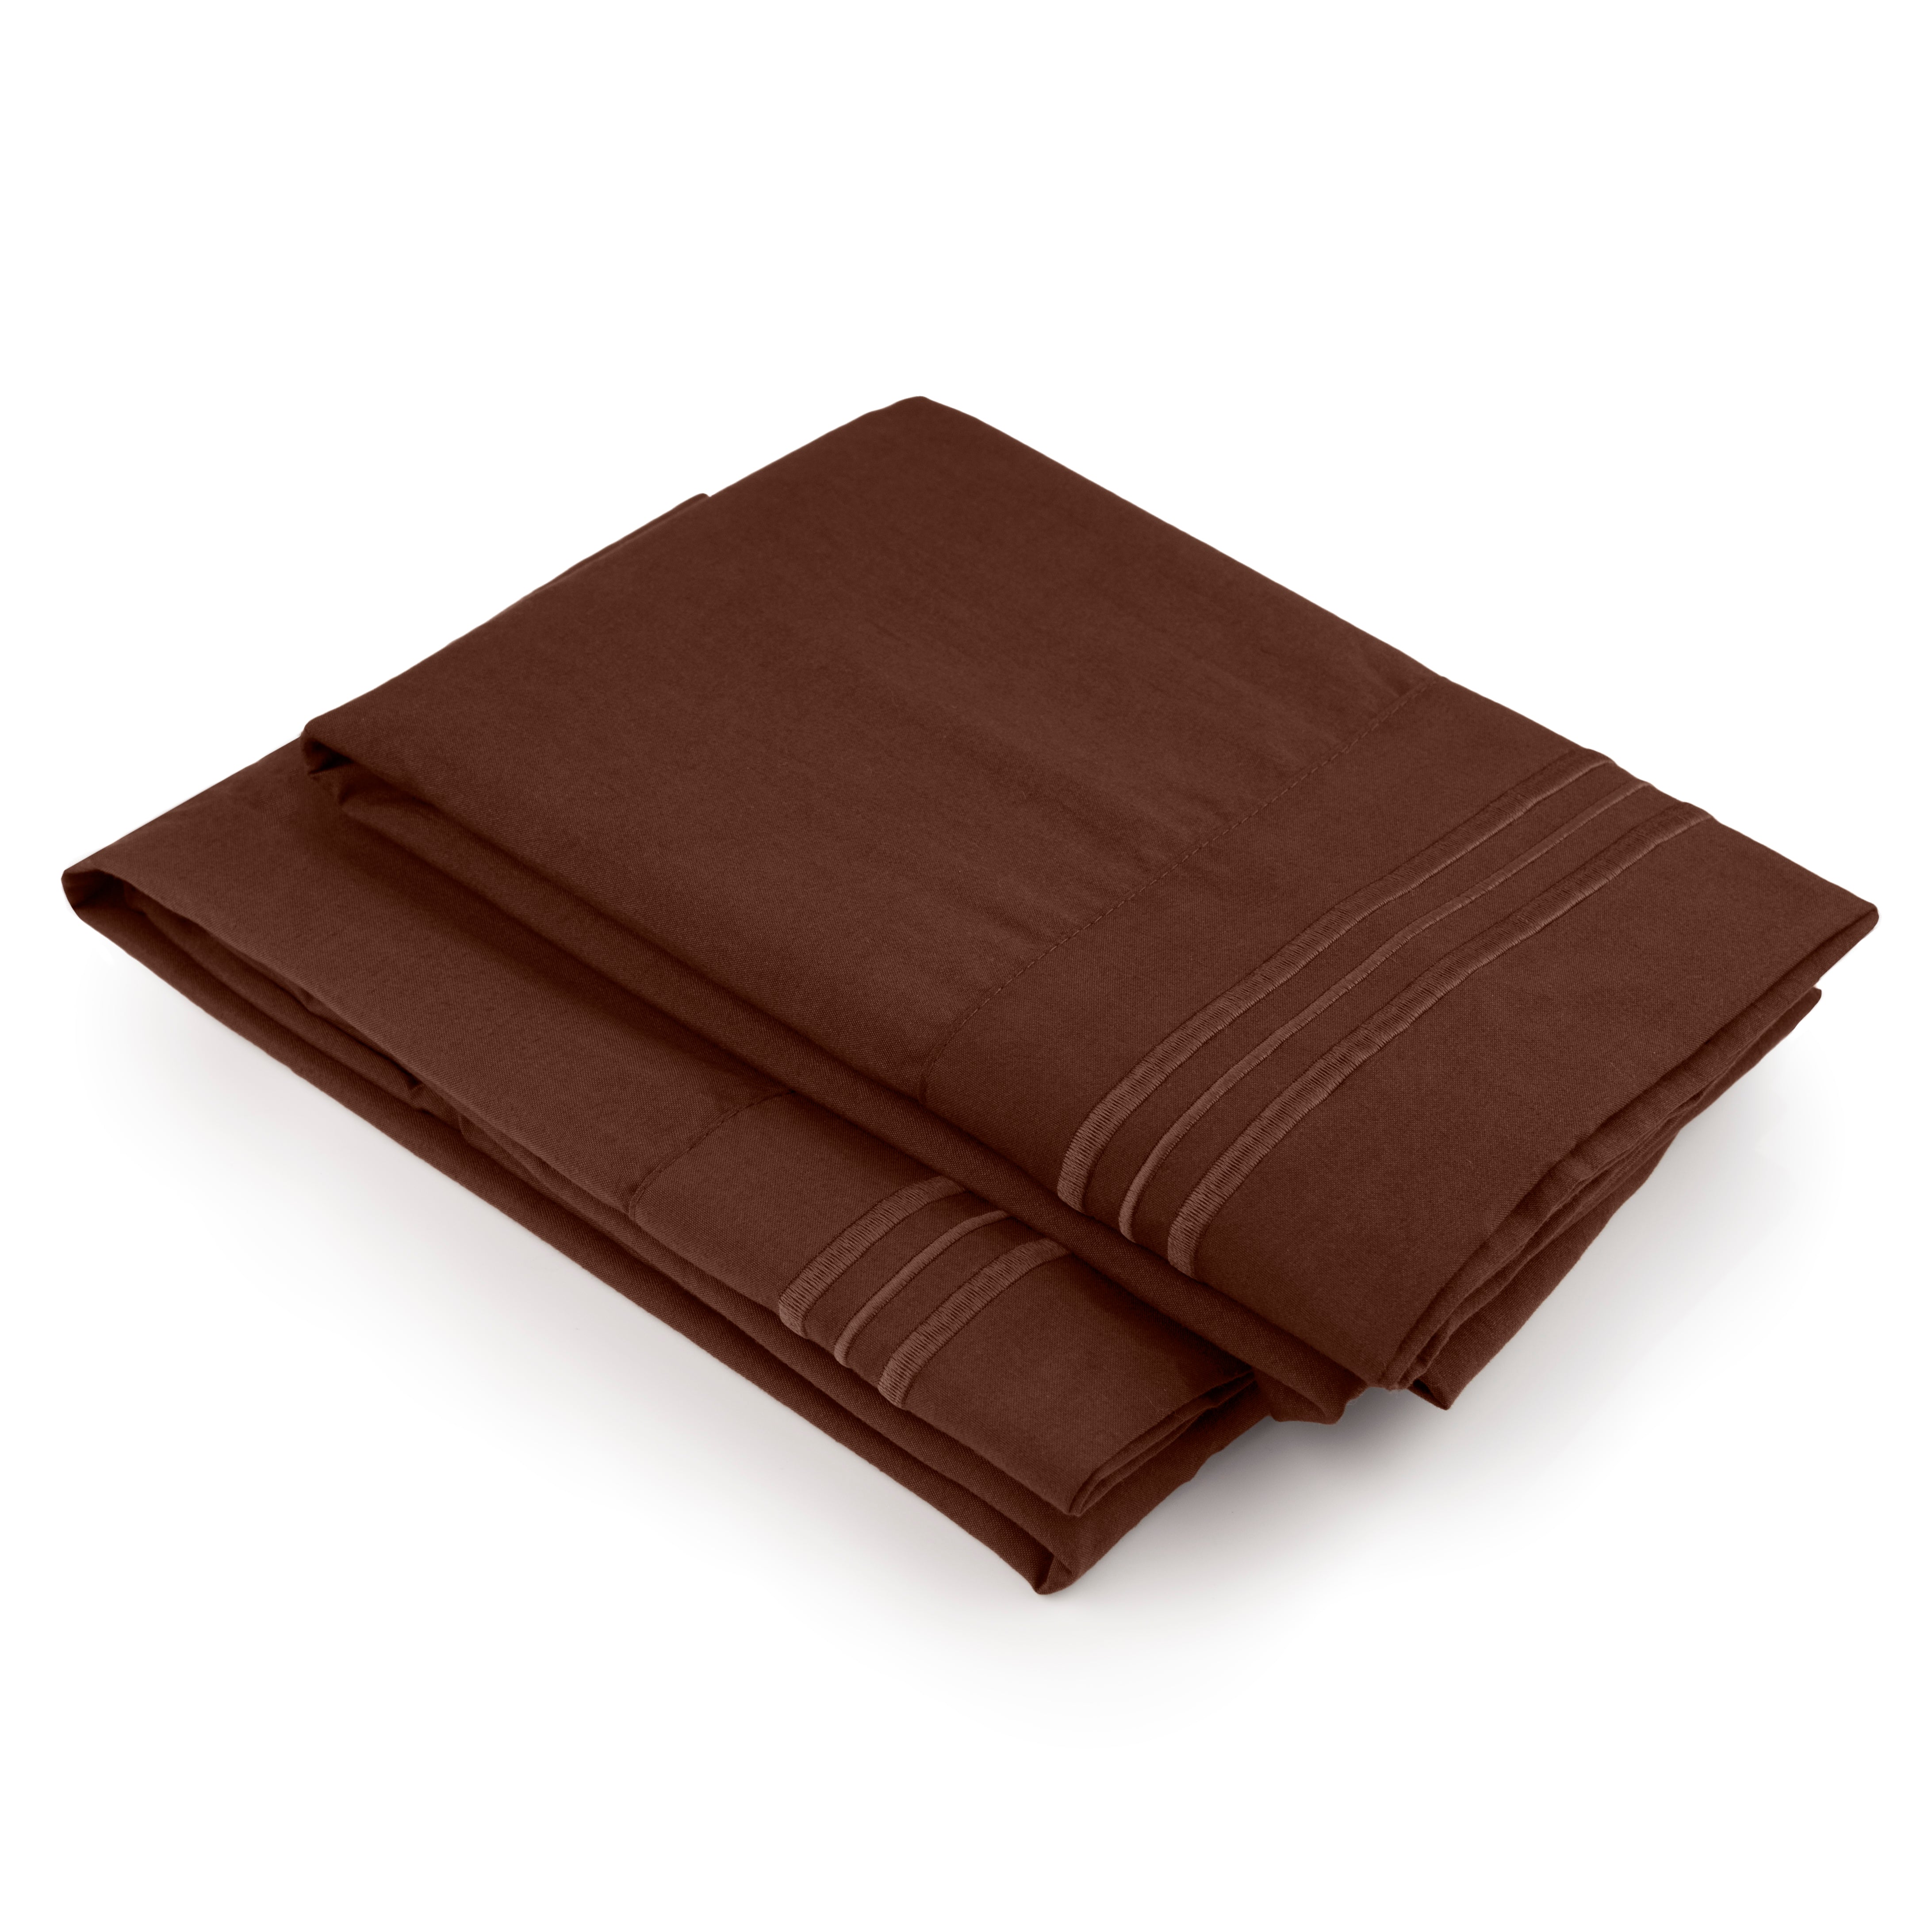 2 Pillowcase Set - Brown